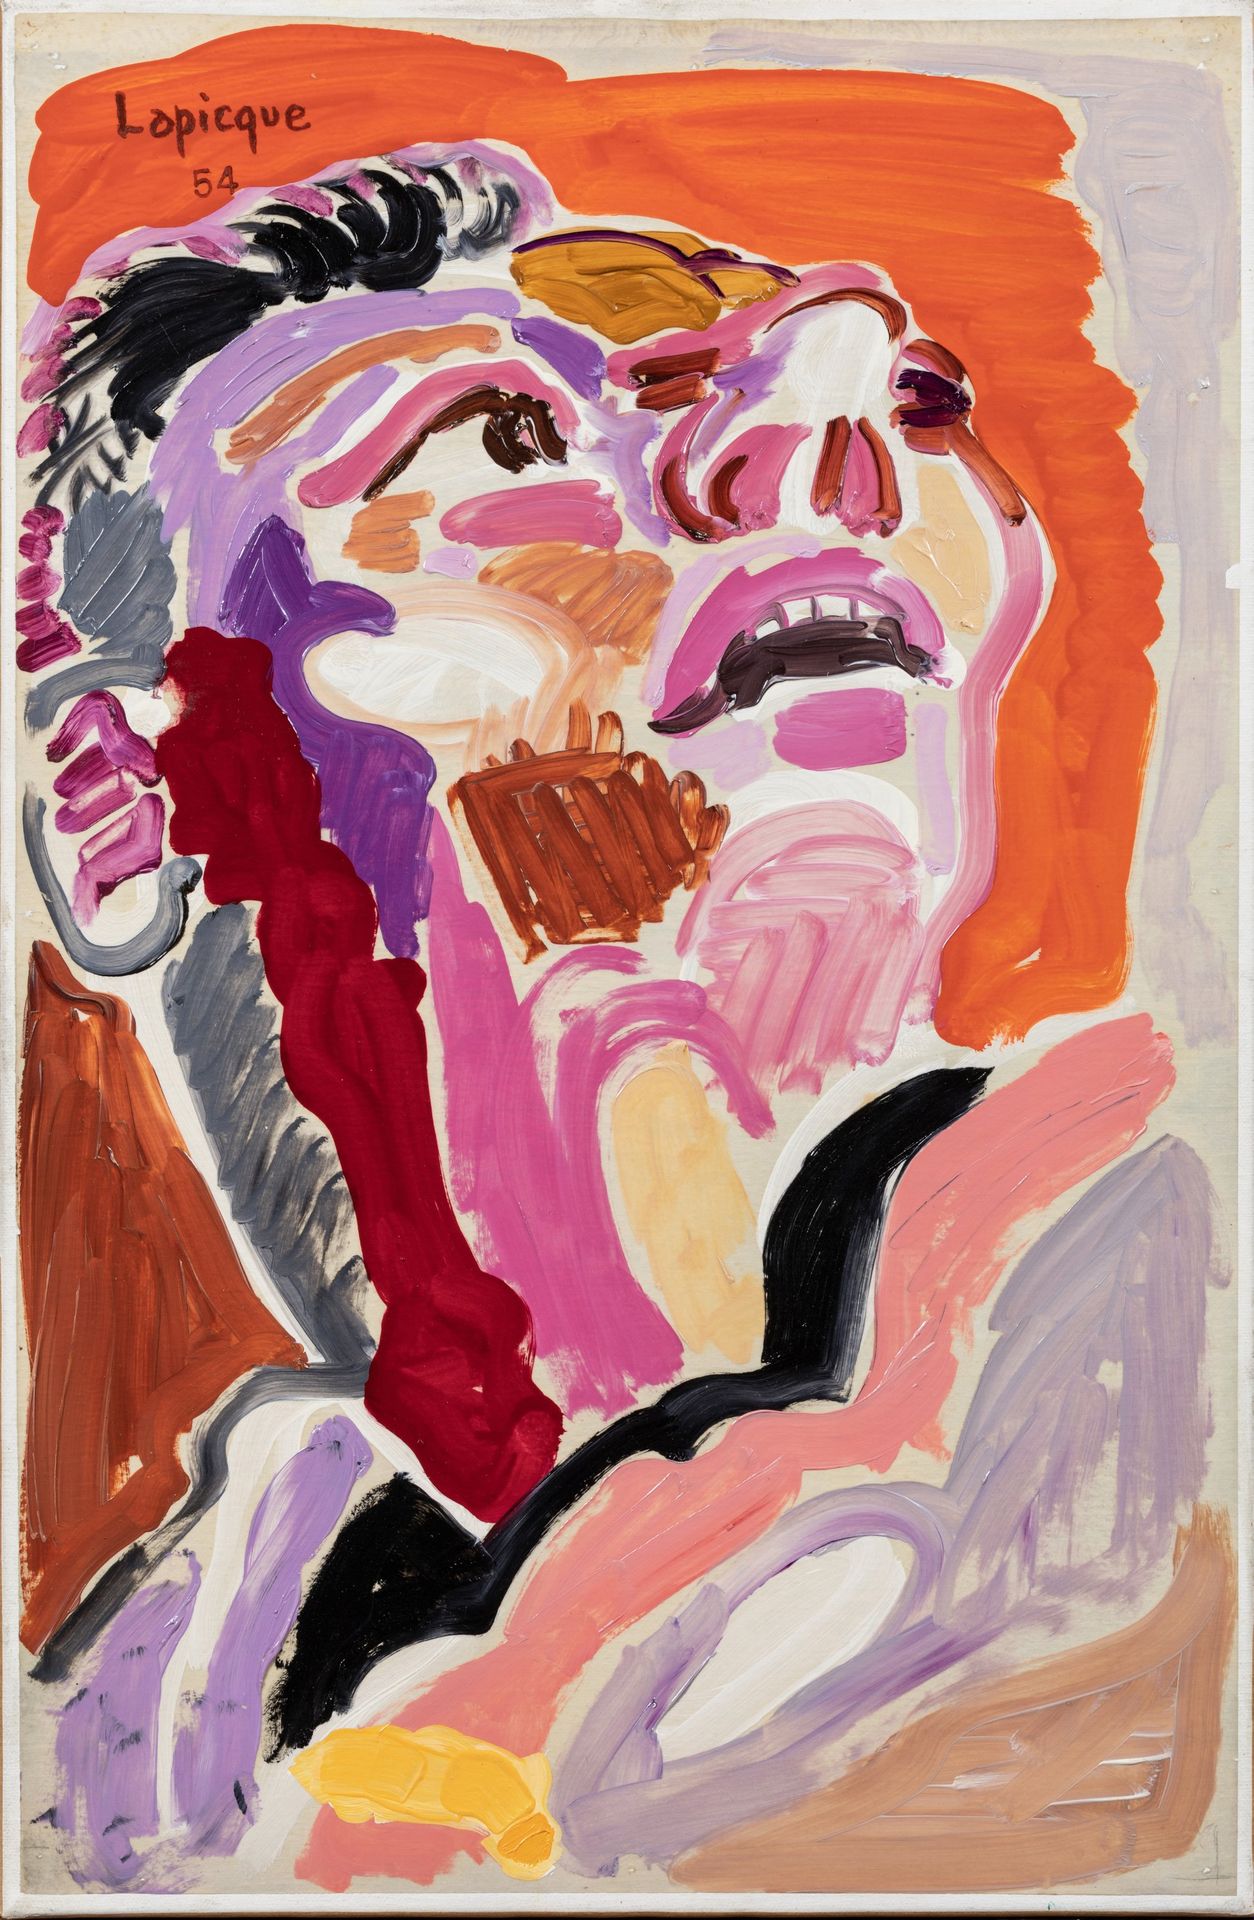 Null 查尔斯-拉皮克（法国，1898-1988）《巴洛克肖像》，1954年 纸上油画，裱在画布上。工作室印章。 高51.3，宽32.4厘米。 出处：Alai&hellip;